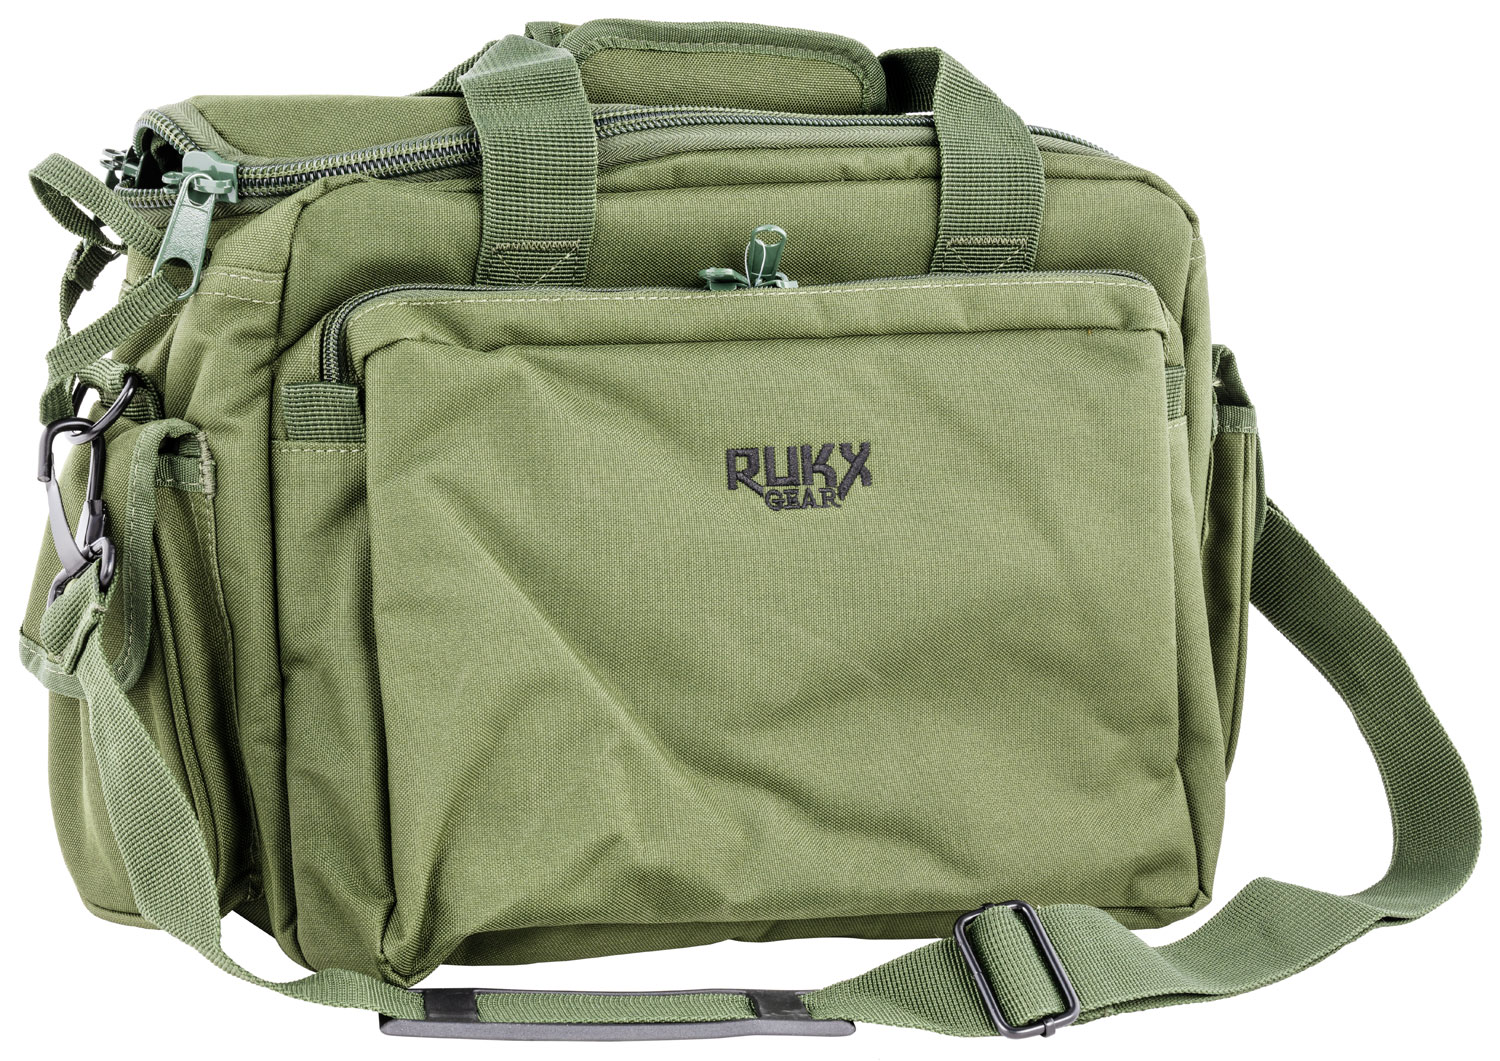 Rukx Gear ATICTRBG Tactical Range Bag  Water Resistant Green 600D Polyester with Hidden Handgun Pocket, Mag & Ammo Storage, Non-Rust Zippers & Carry Handle 16